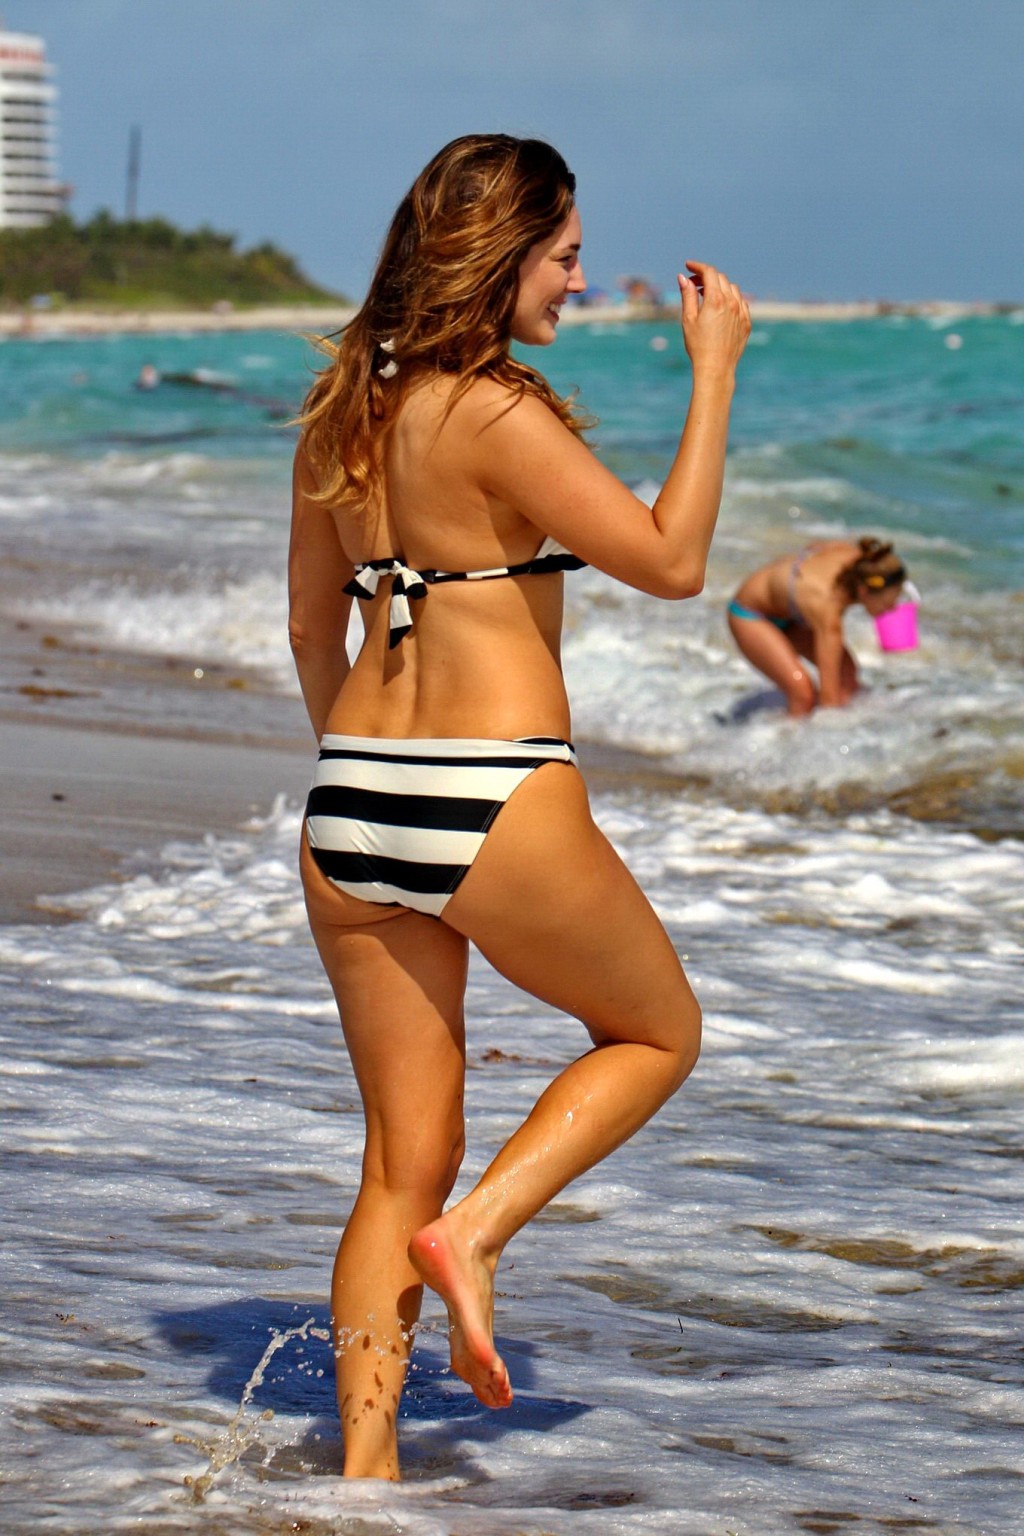 Busty Kelly Brook wearing a striped bikini on a beach in Miami #75205446